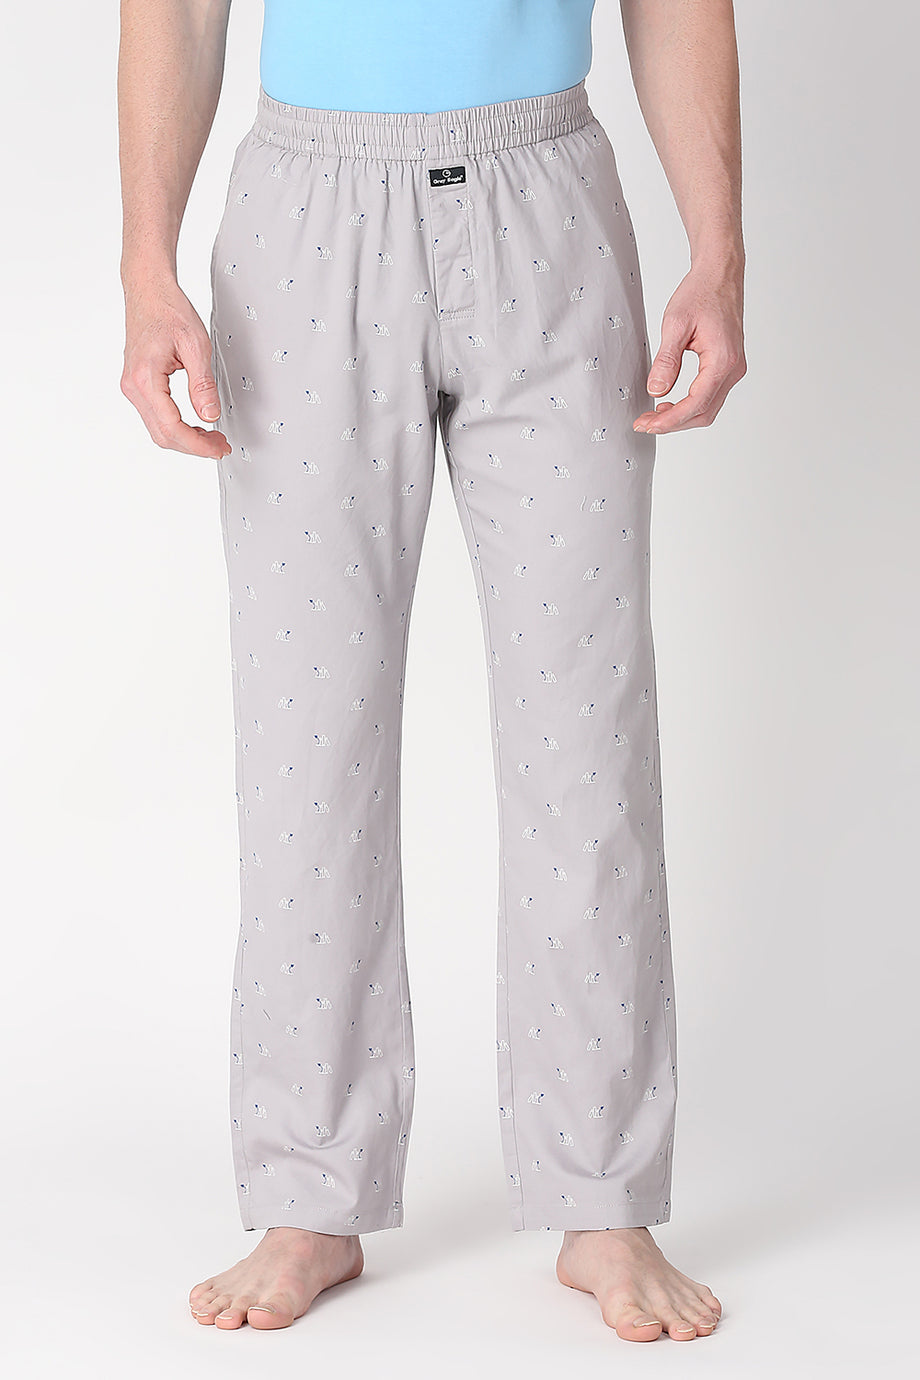 Shakambhri Mens Hemp Pajama Elastic Waist Bottoms Lounge Pants Lightweight  Pajamas With Pocket -Night wear;Gym;